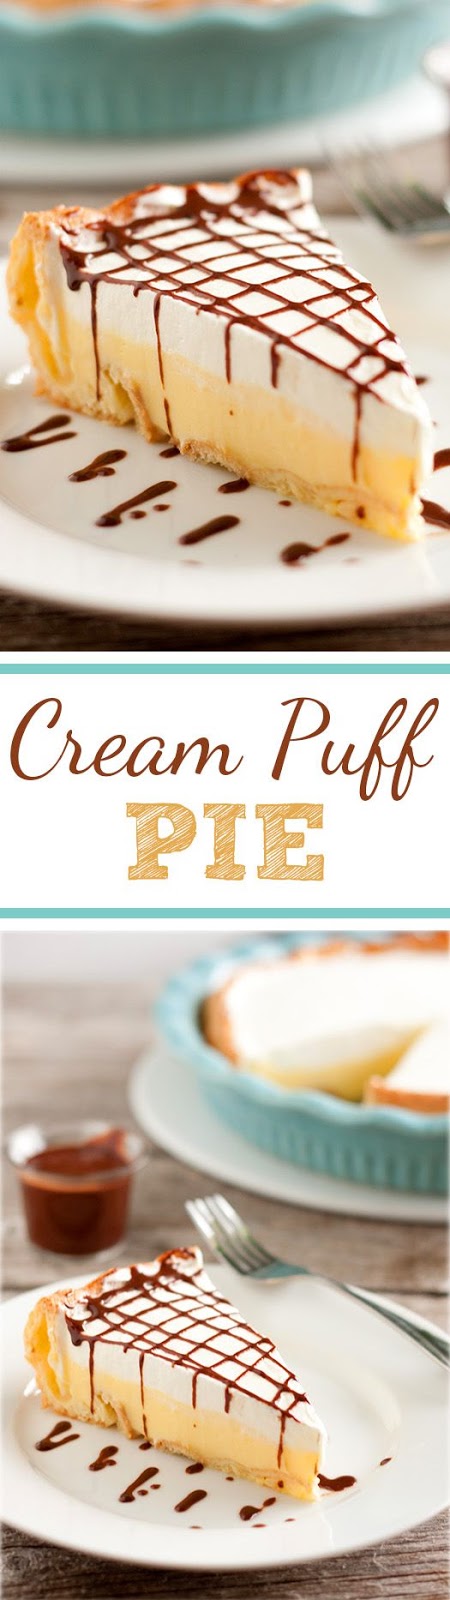 Cream Puff Pie (aka cream puff cake or eclair cake)